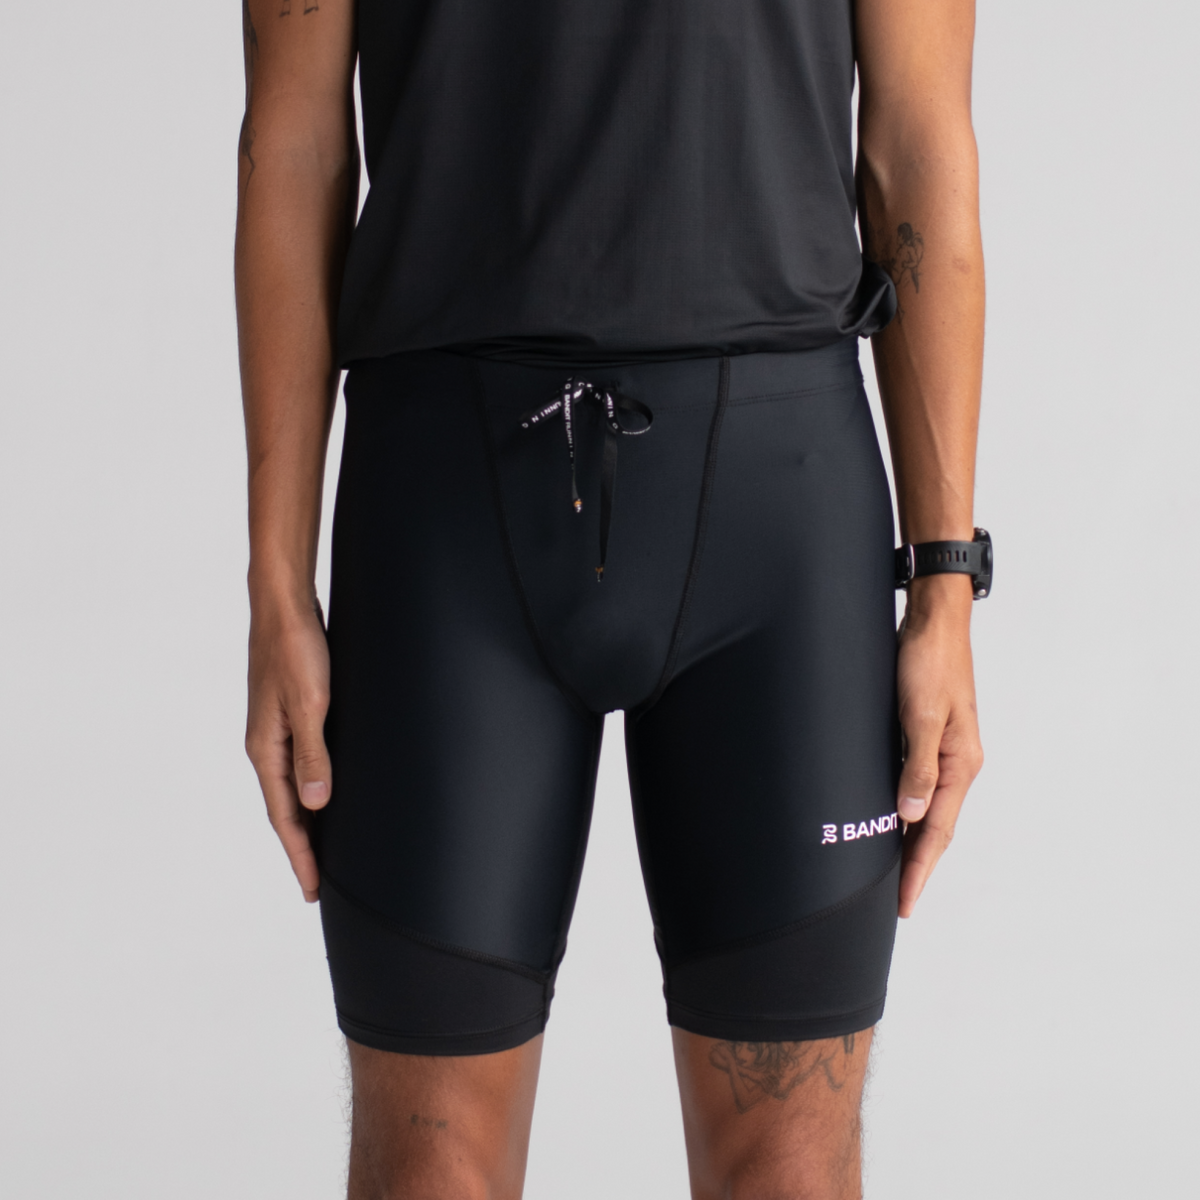 Denim shorts over black pantyhose - Short Shorts & Volleyball - Forum